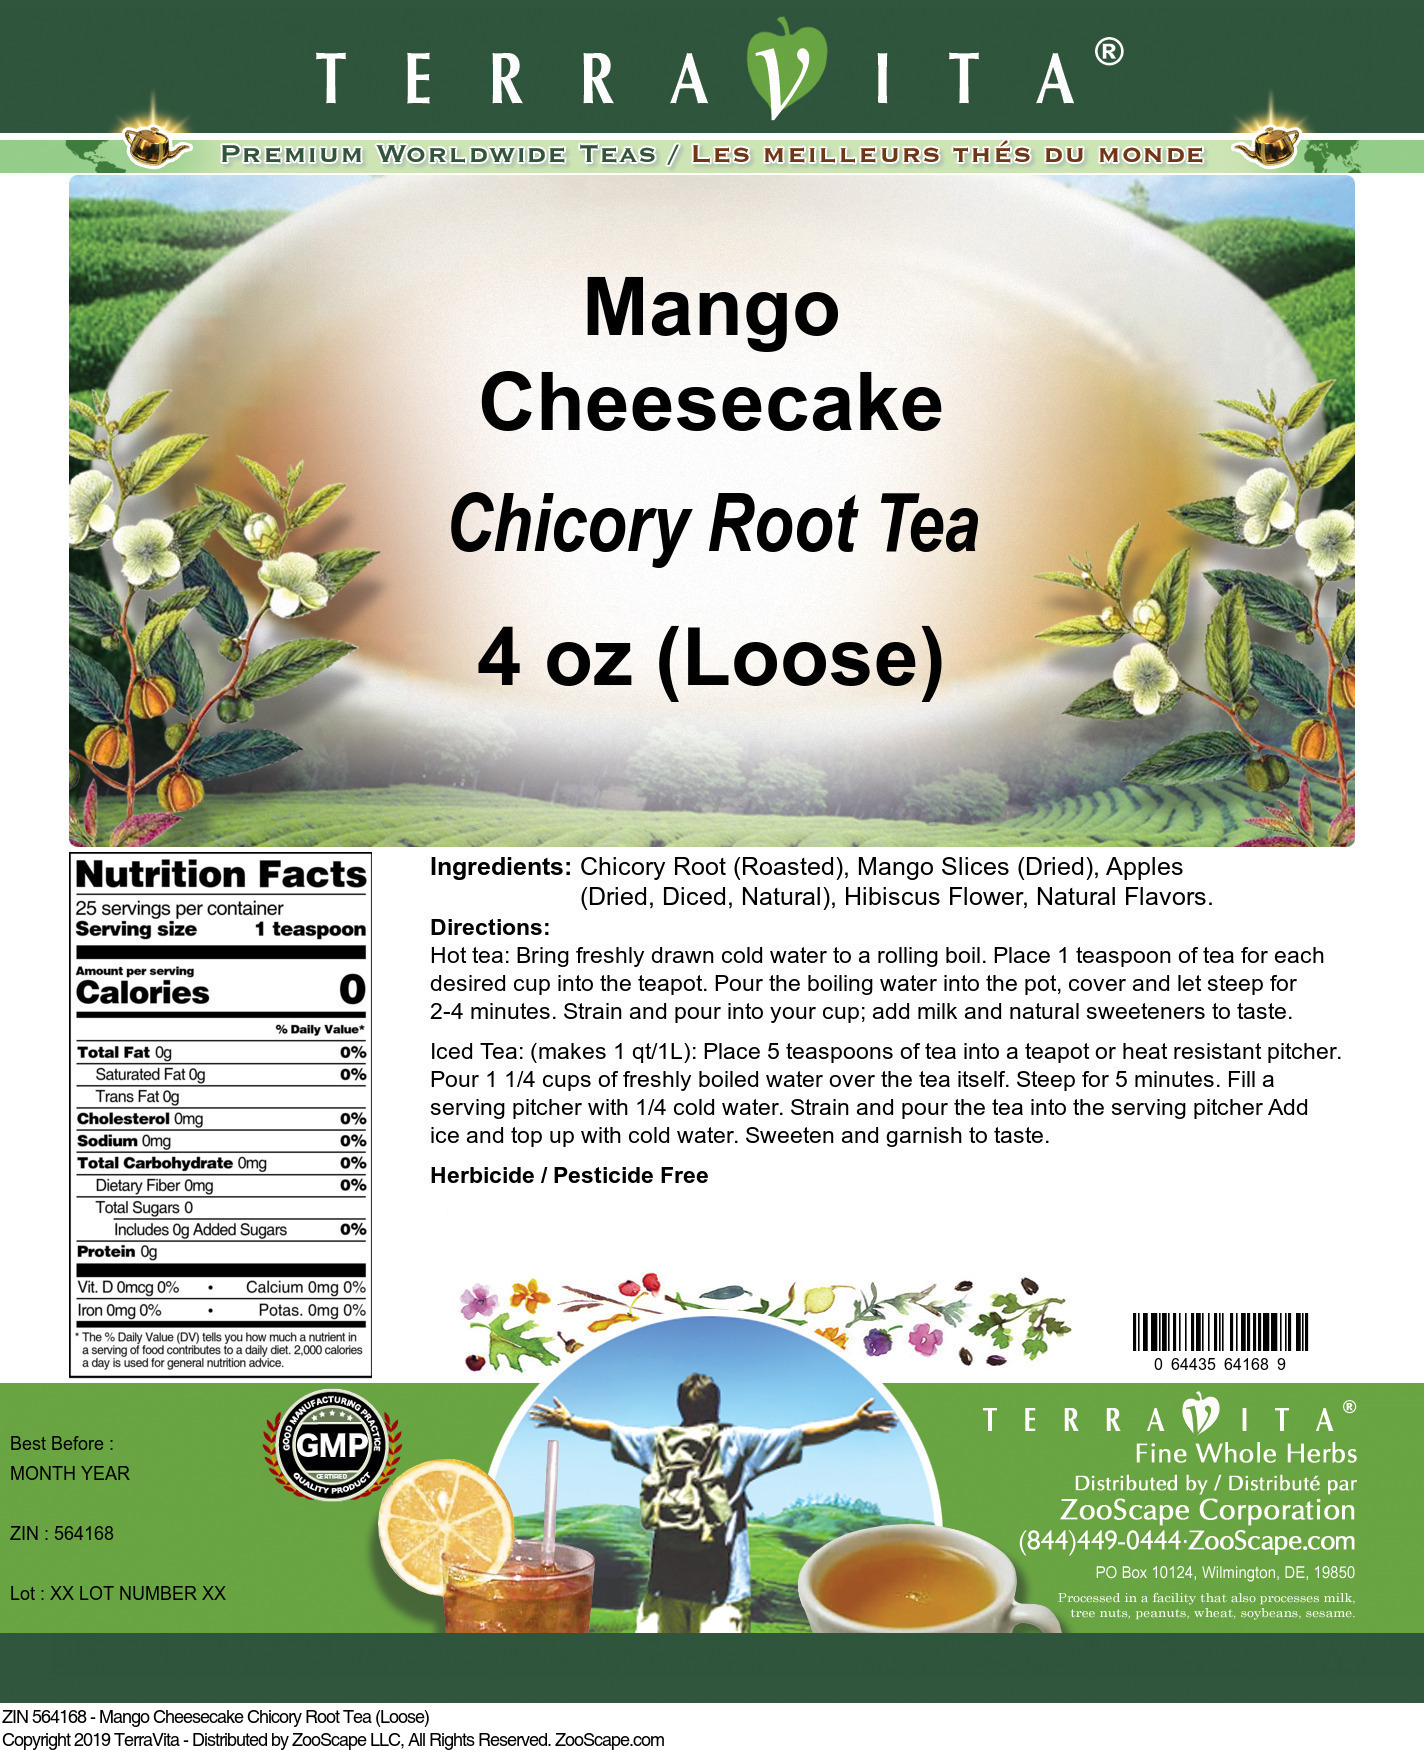 Mango Cheesecake Chicory Root Tea (Loose) - Label